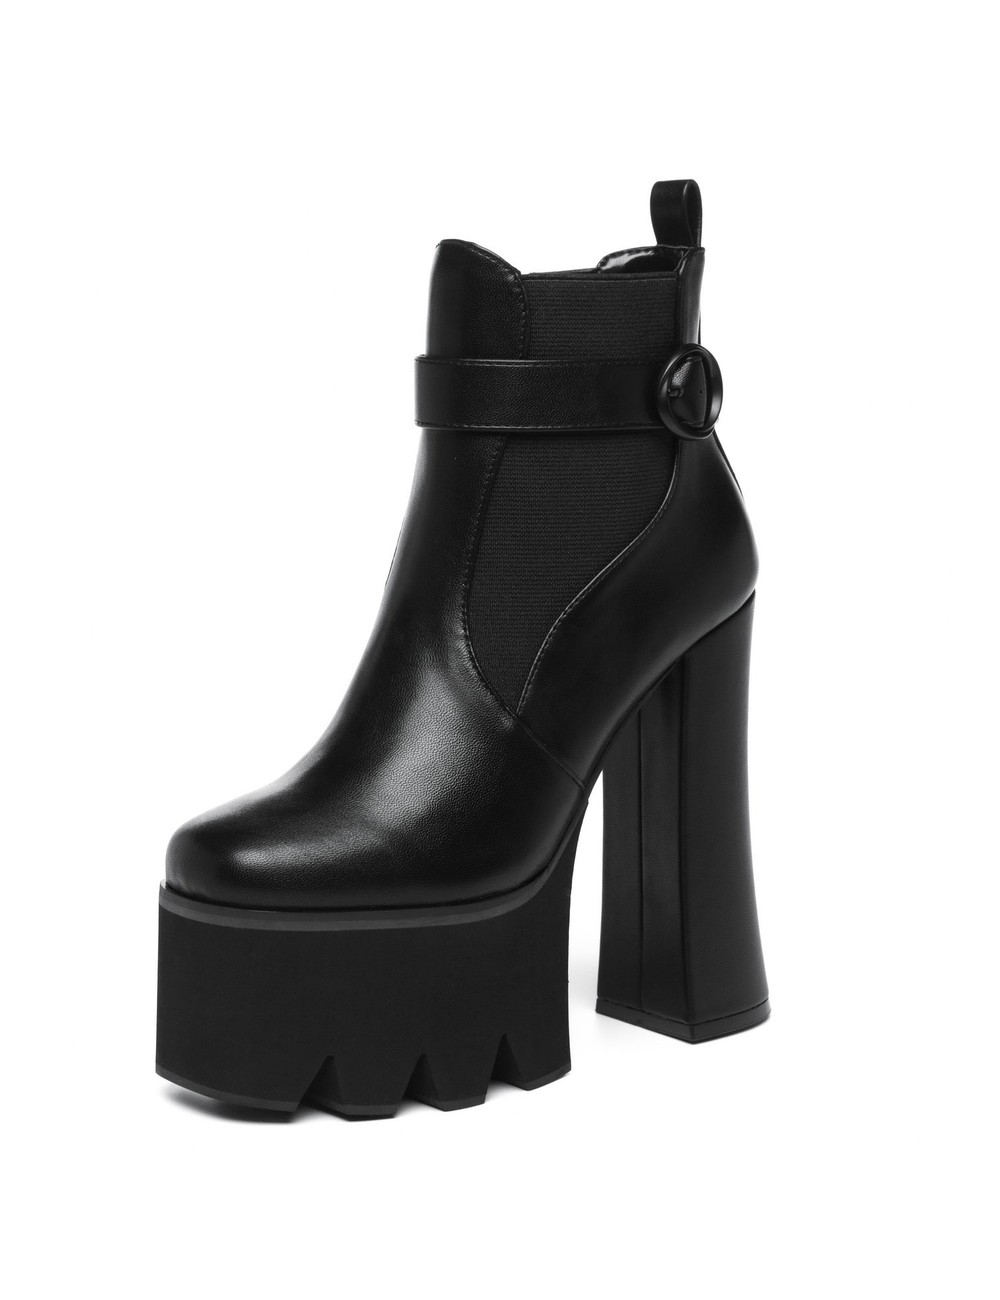 Giaro CEDAR BLACK MATTE - Shoebidoo Shoes | Giaro high heels